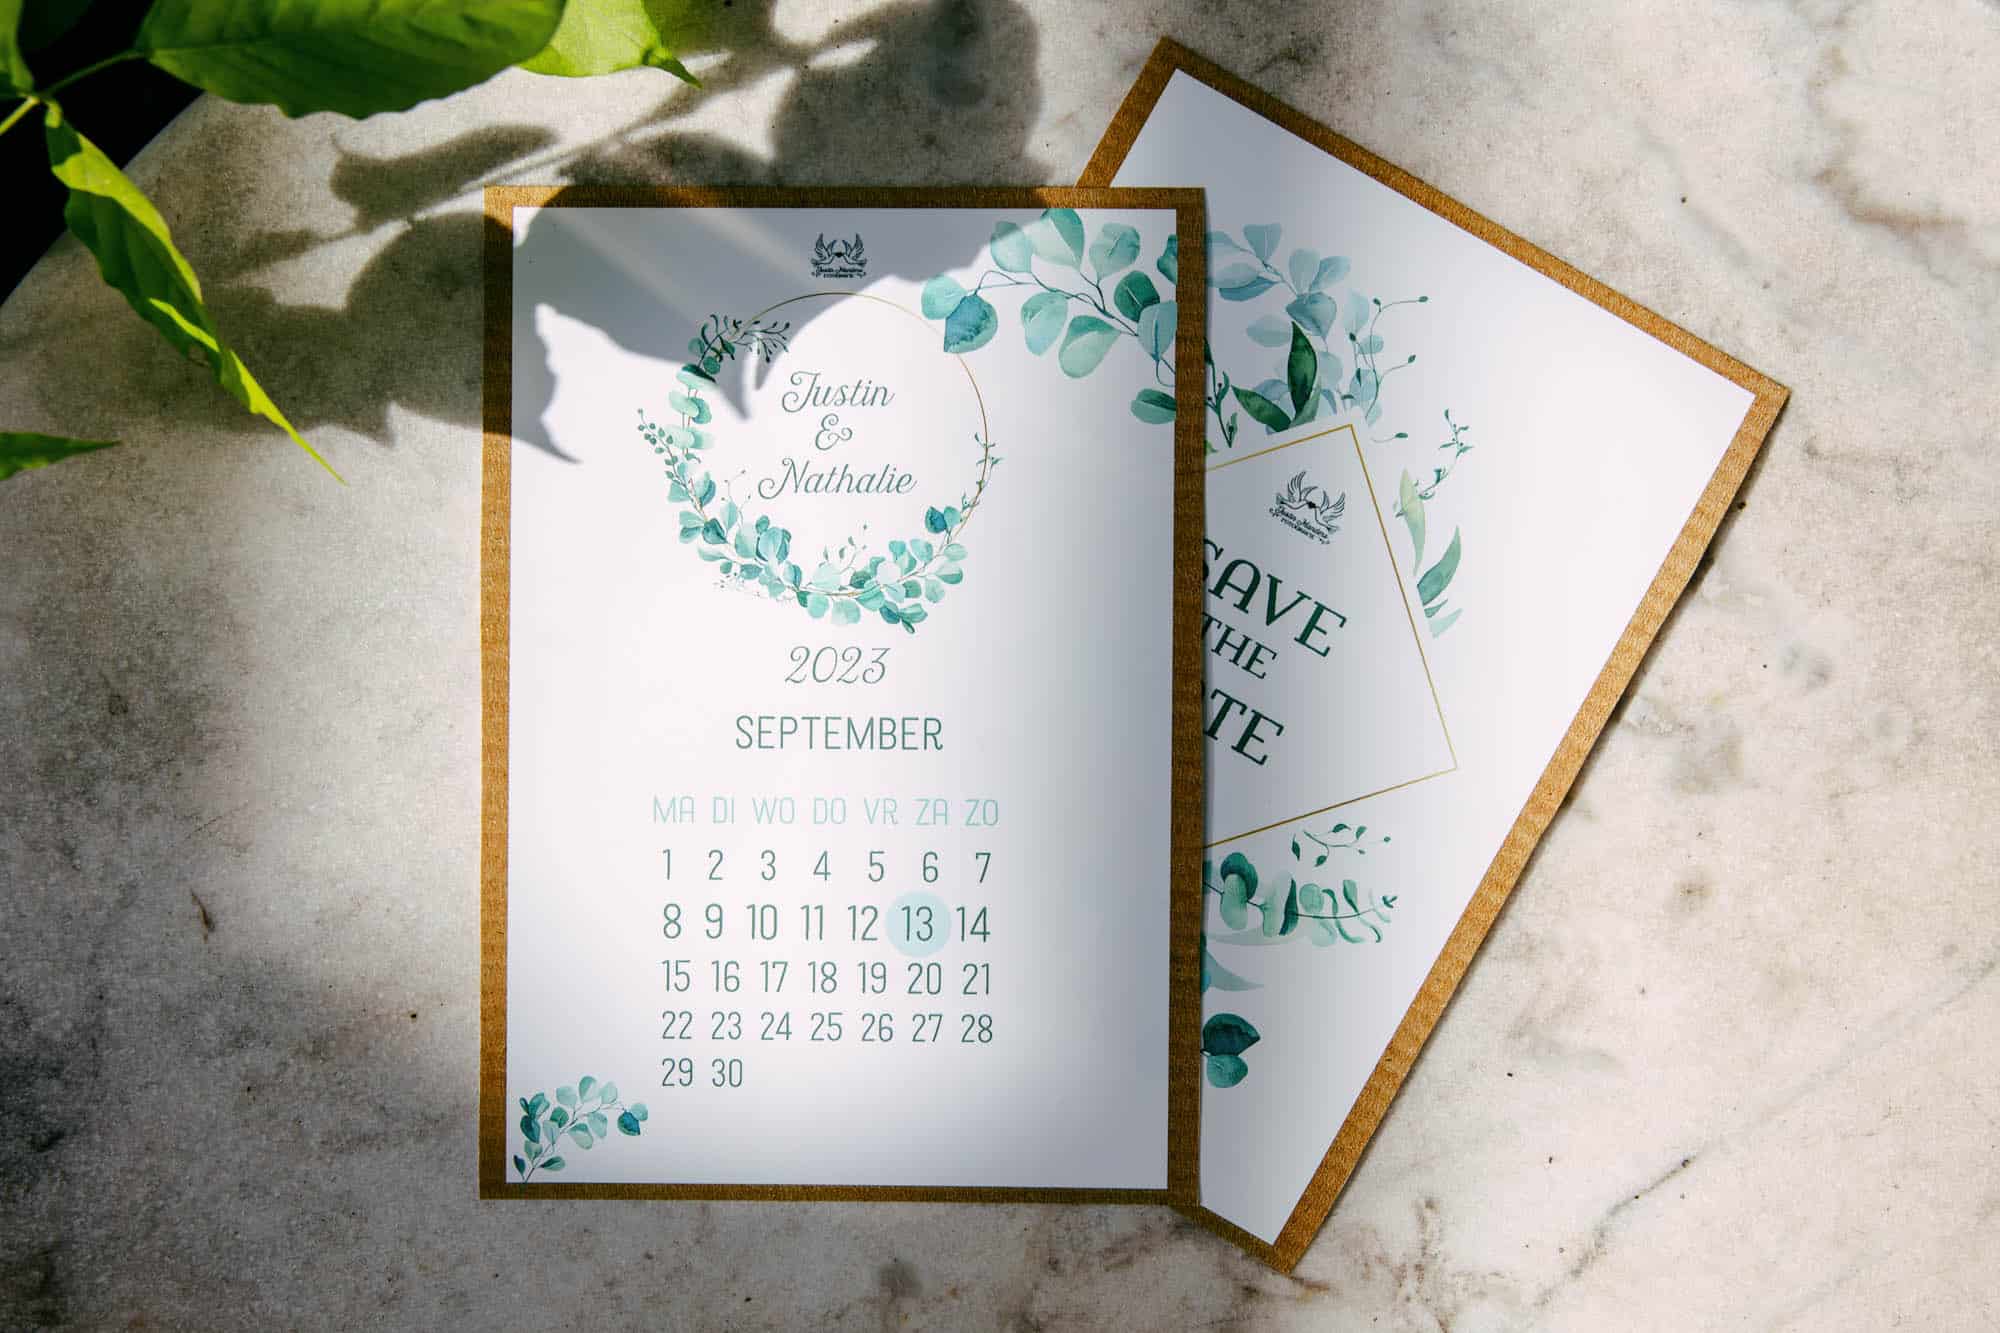 Eucalyptus save the date wedding cards for weddings.